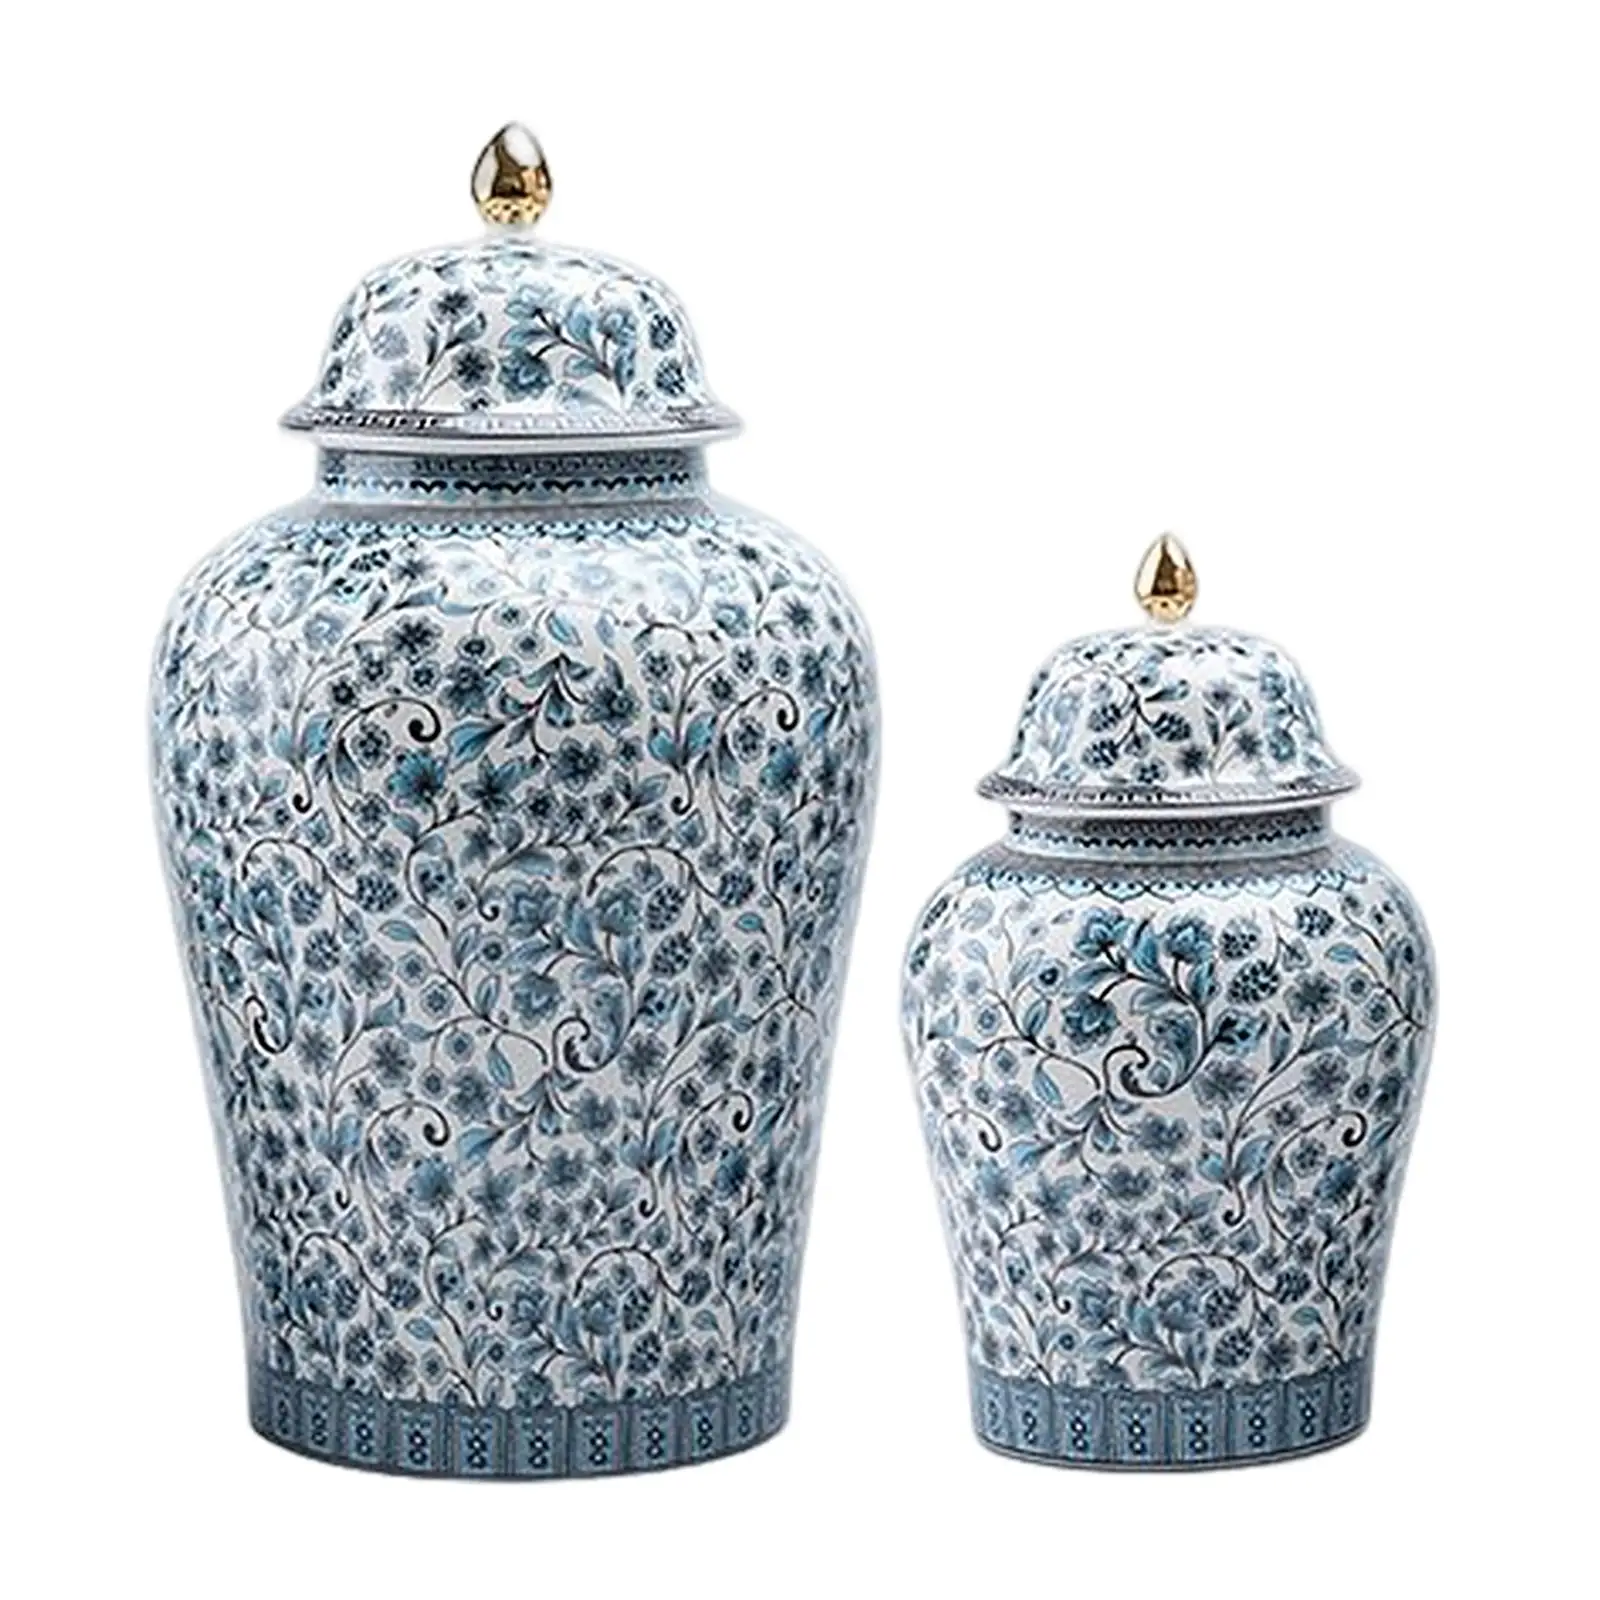 Blue and Bud Vase Ginger Jar with Lid Table Decoration Glazed